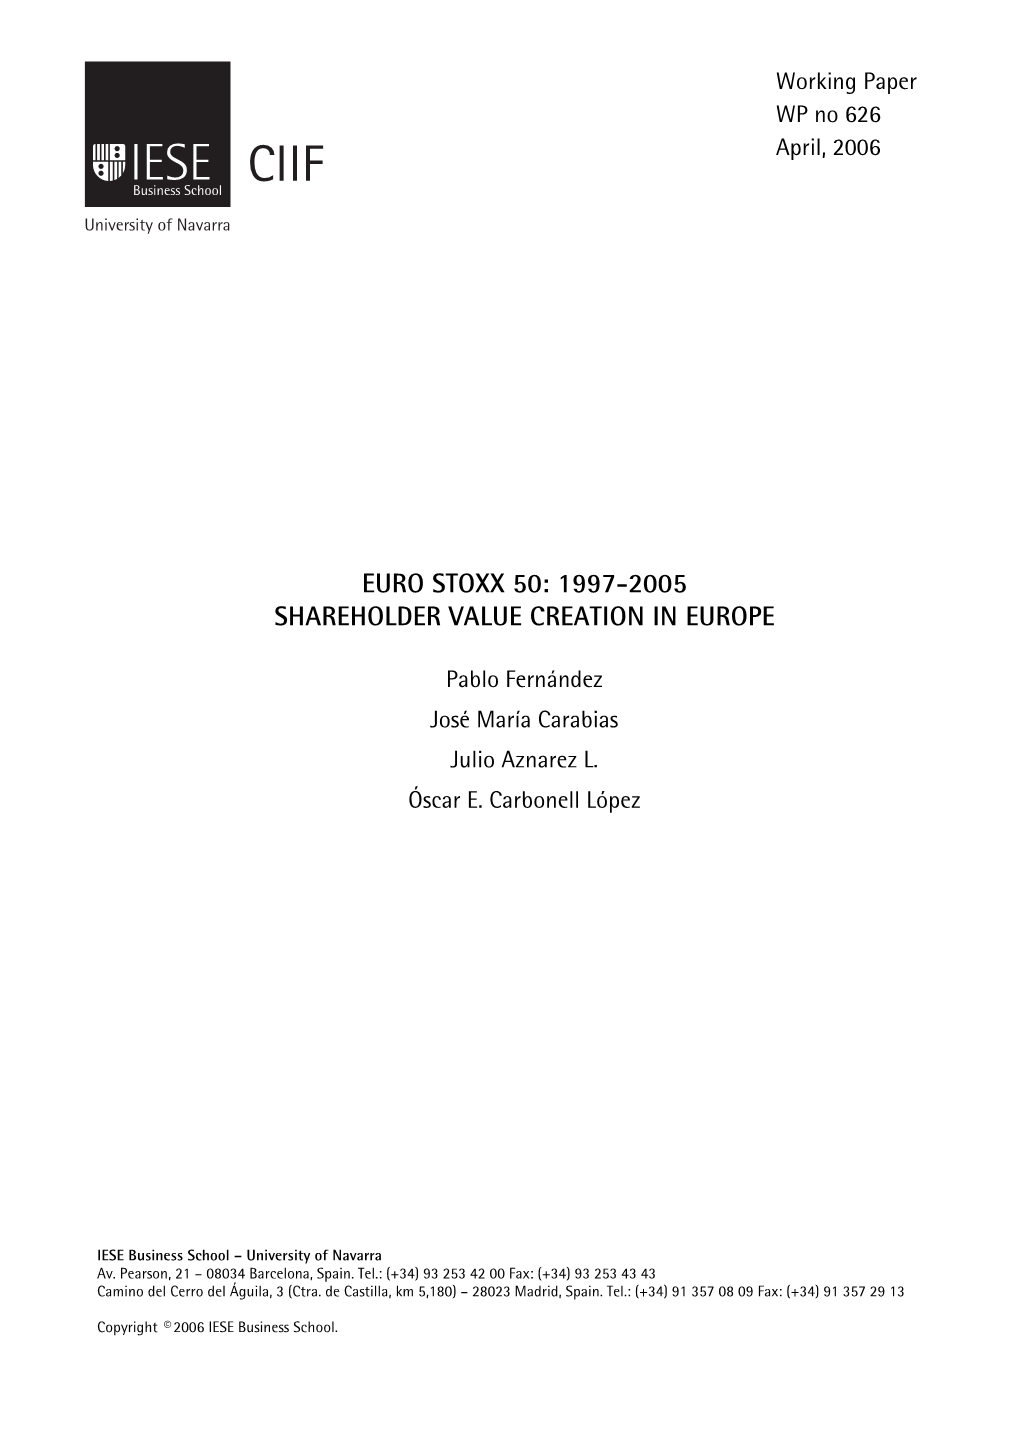 Euro Stoxx 50: 1997-2005 Shareholder Value Creation in Europe